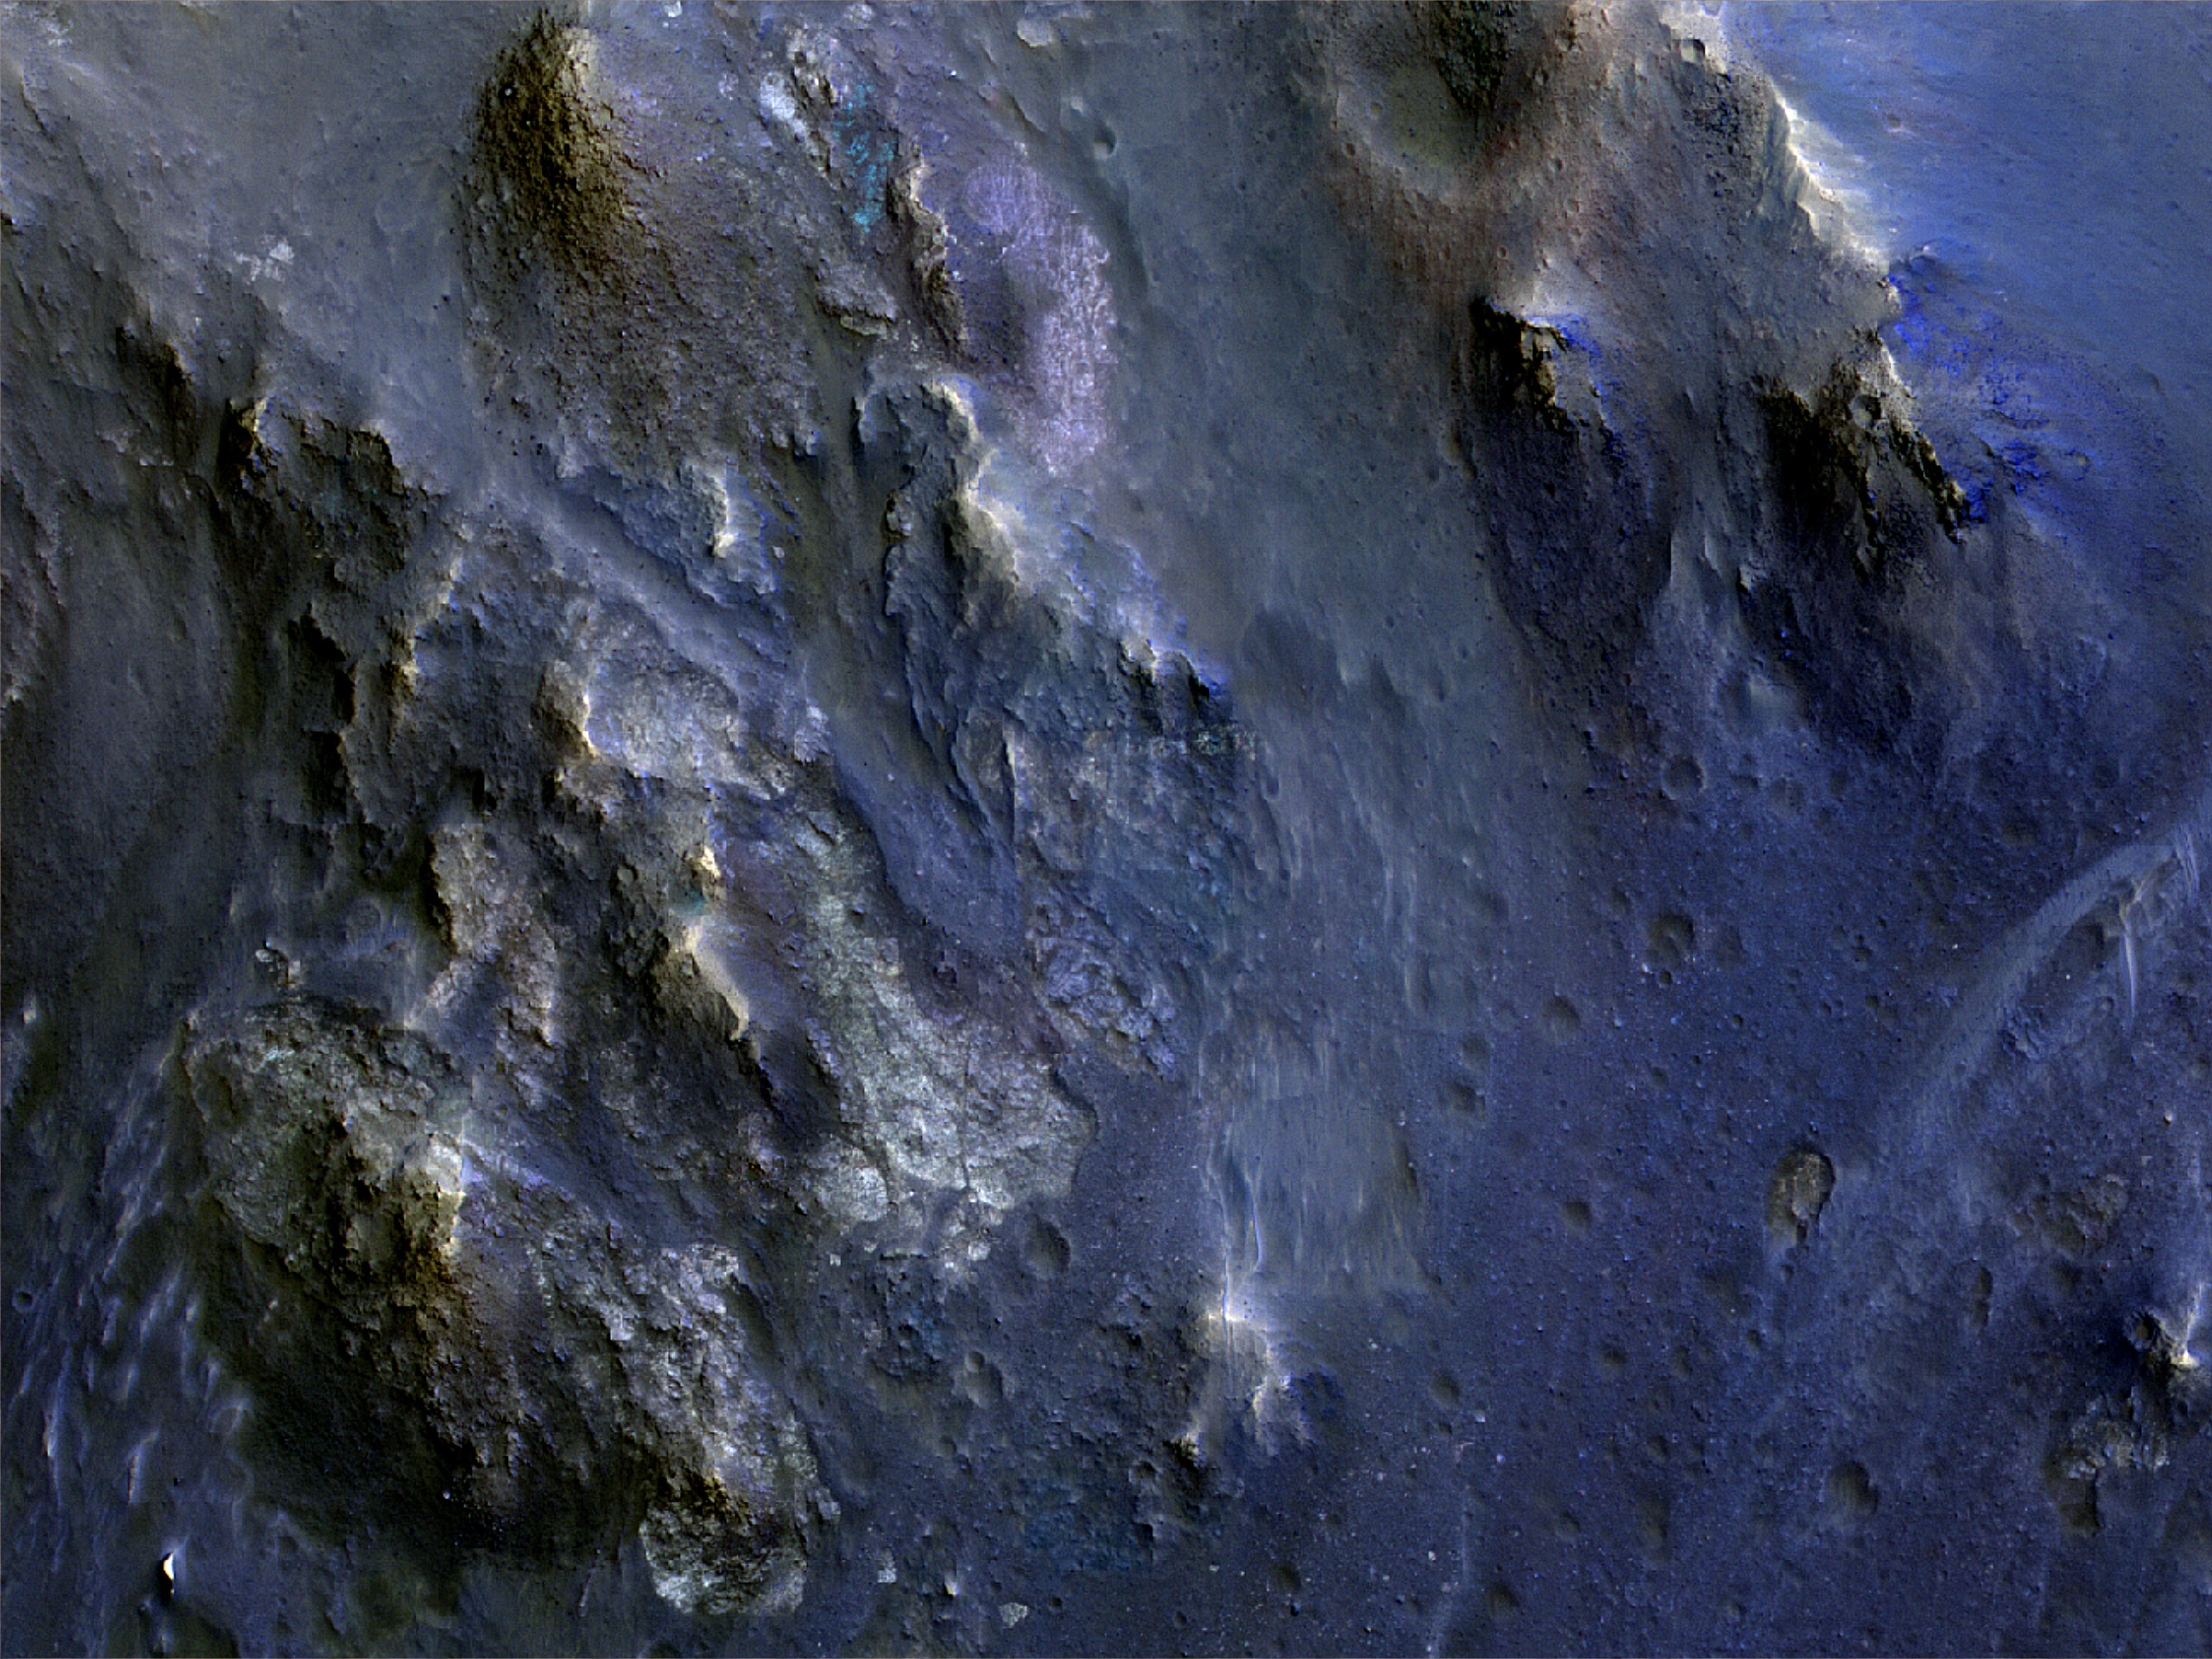 Exposed Bedrock in Eos Chasma